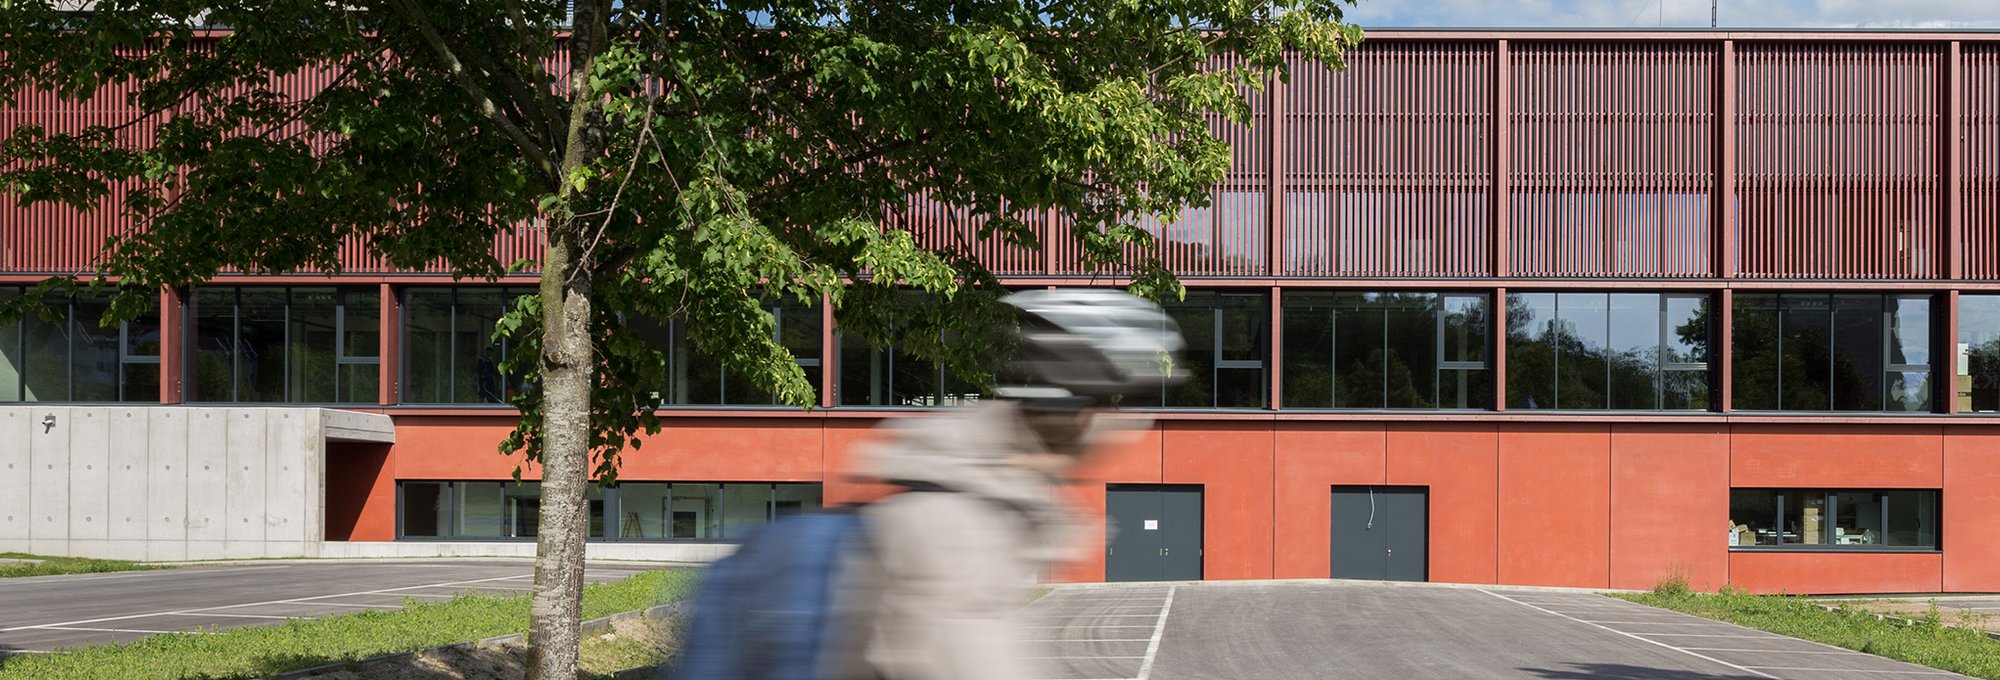 LIT Open Innovation Center am Campus der Johannes Kepler Universität Linz